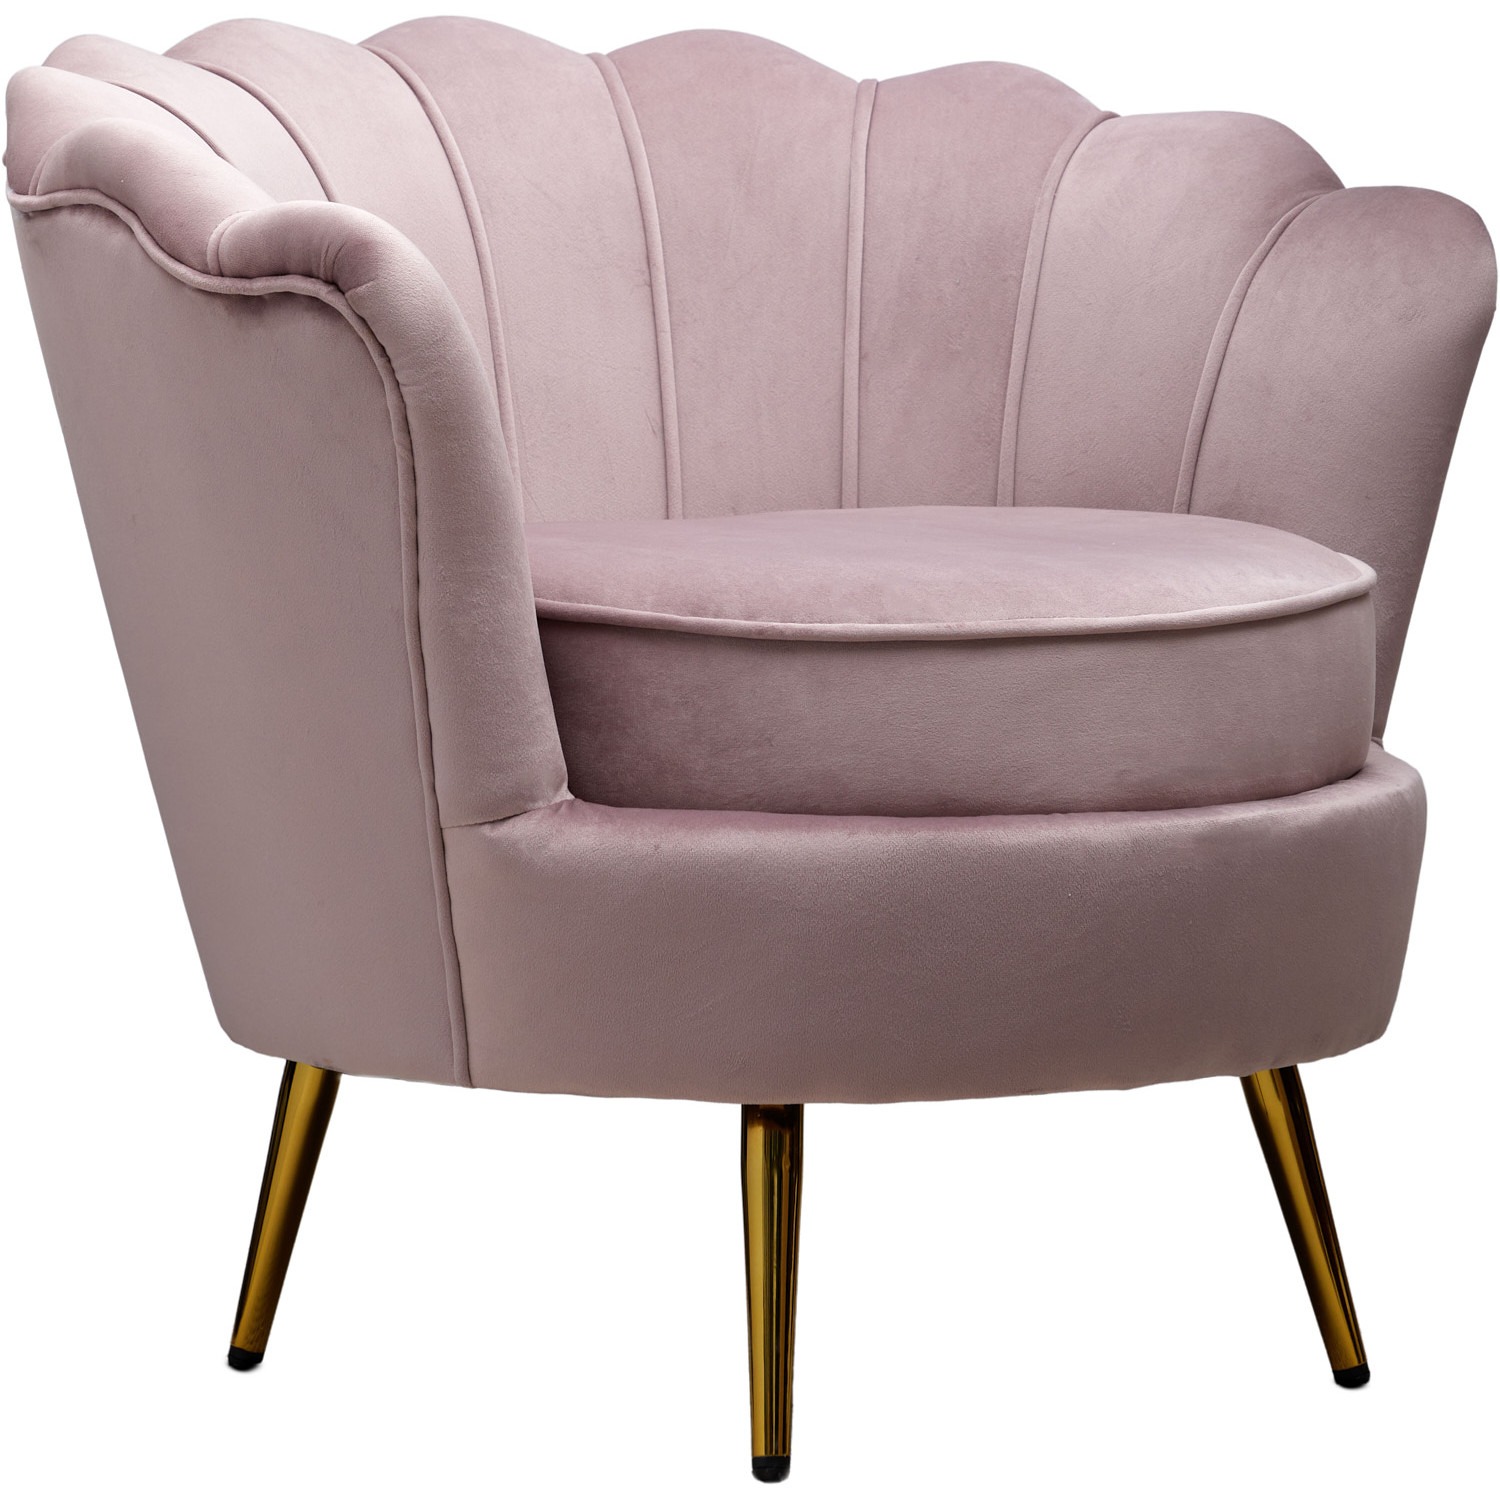 Кресло Glasar Флоренция розовое 78х77х65 см кресло glasar флоренция серое 78х77х65 см